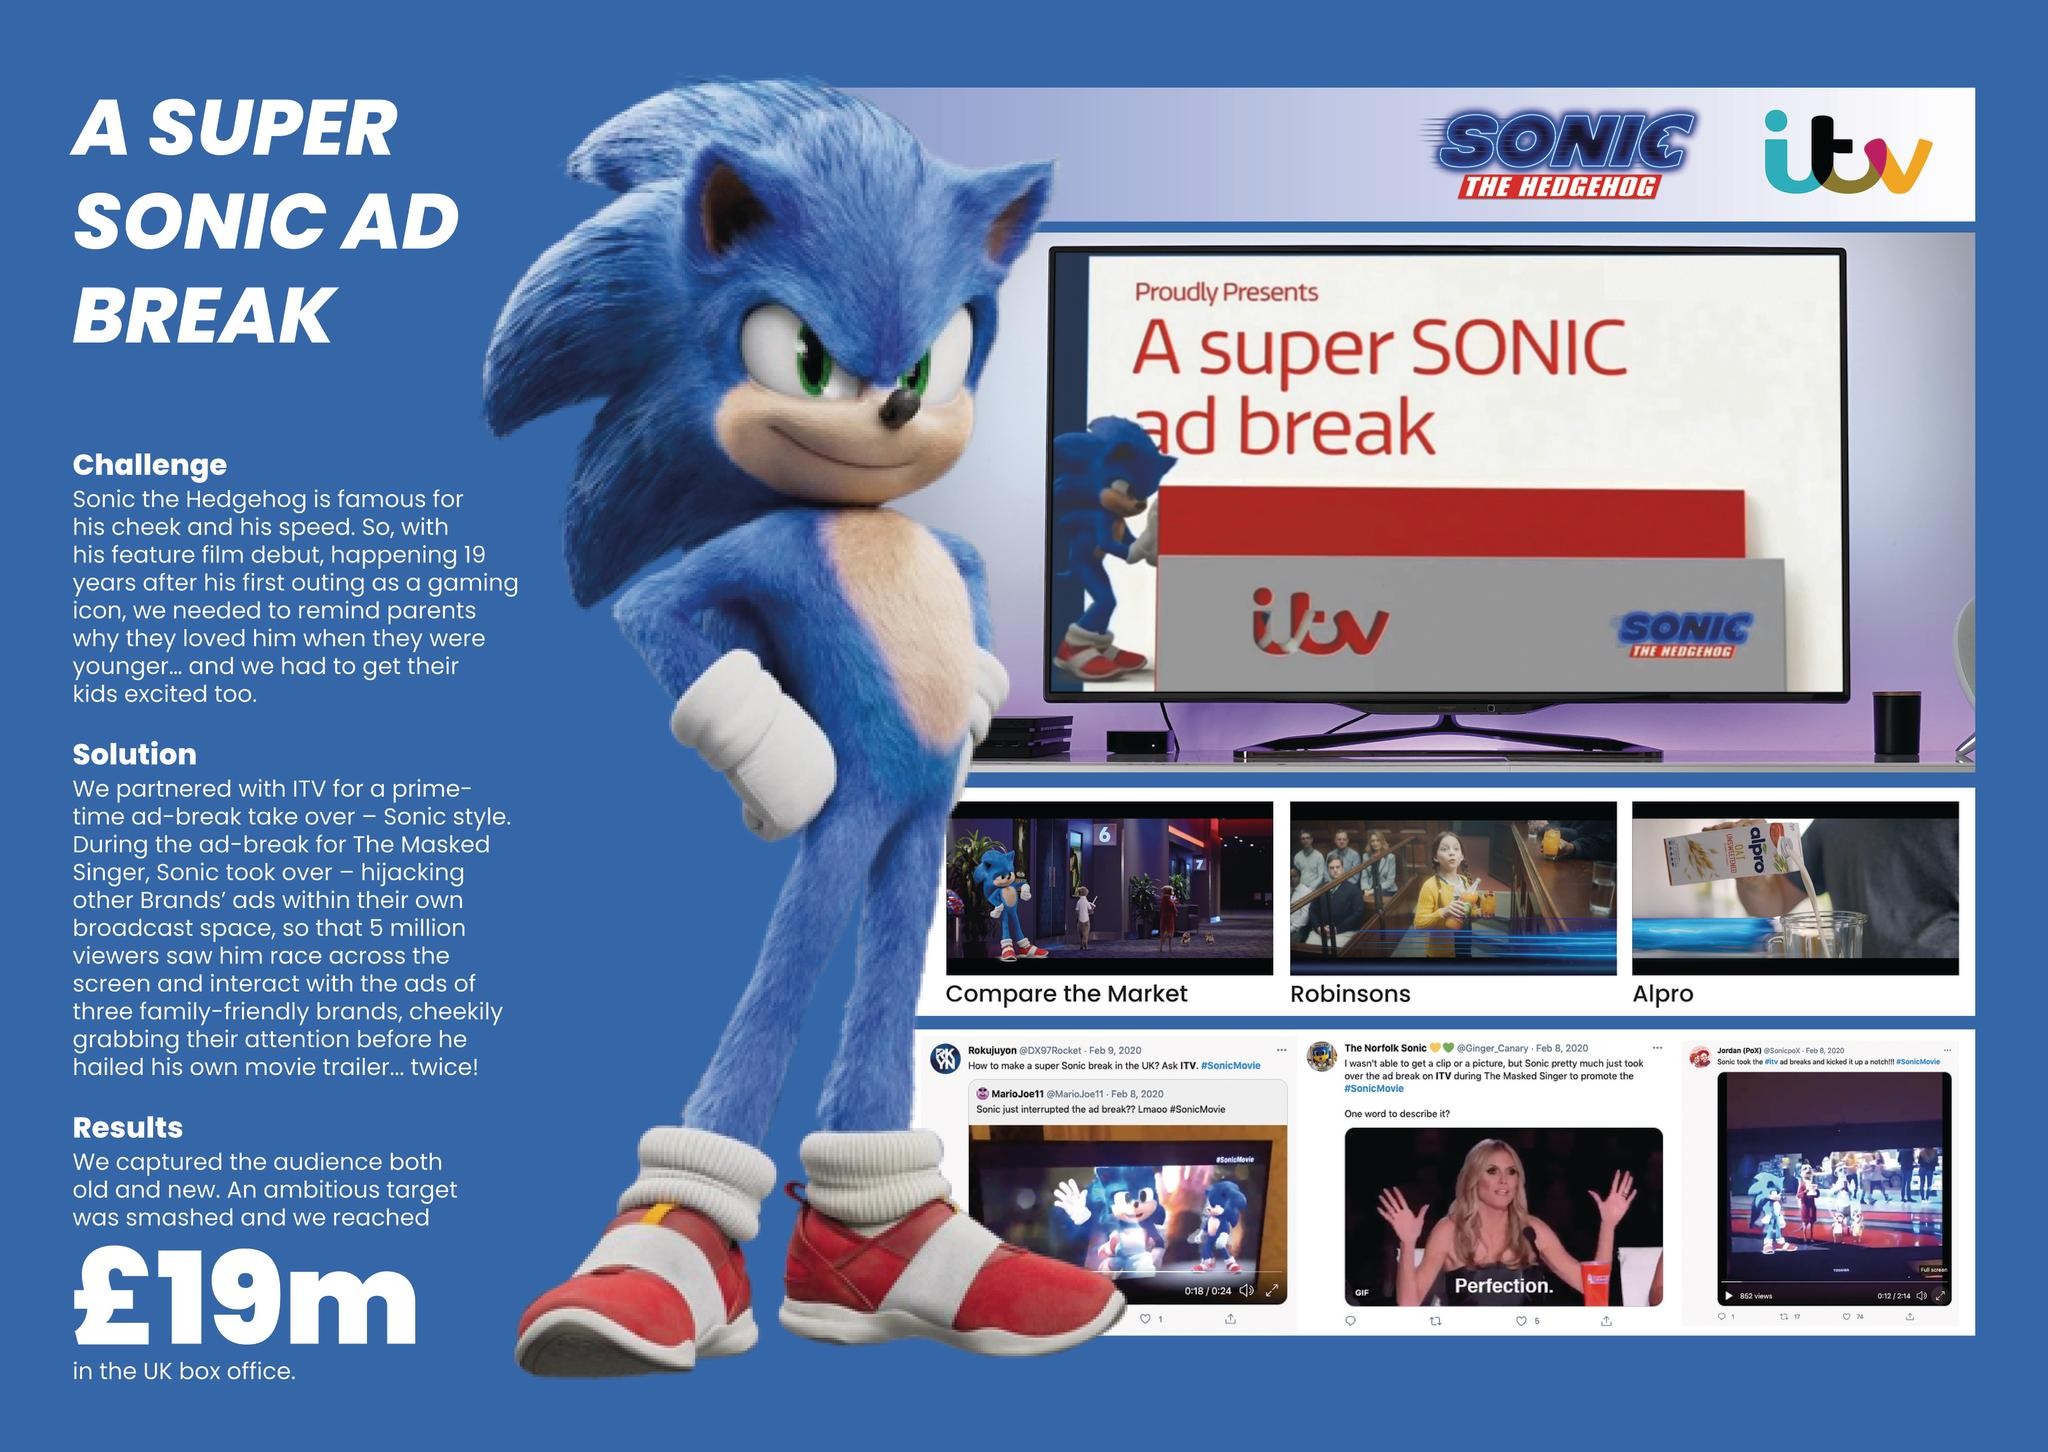 A Super Sonic ad Break